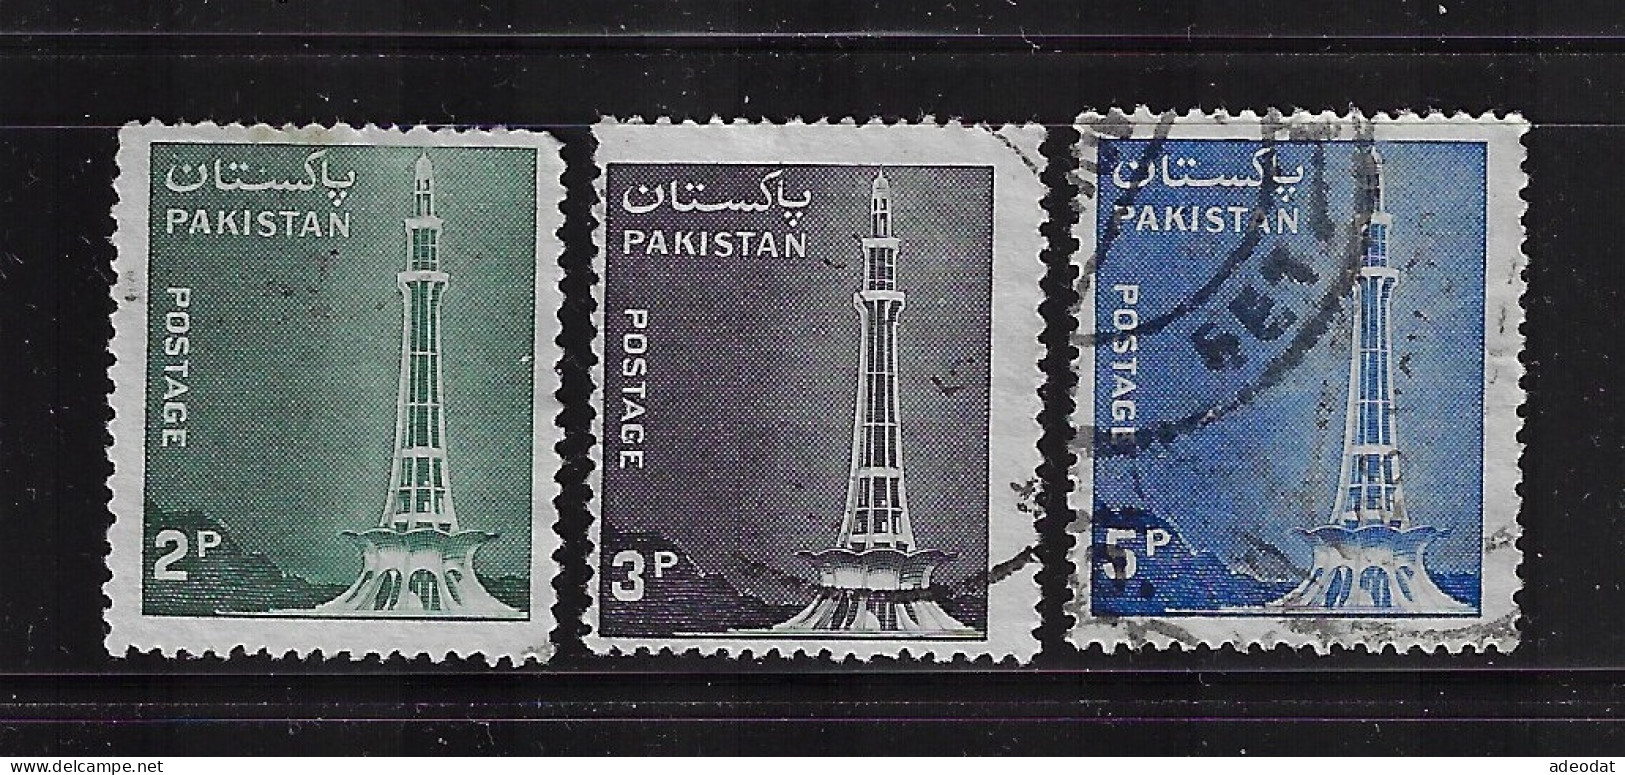 PAKISTAN 1978 SCOTT 459-461  USED   CV $0.60 .j - Pakistán